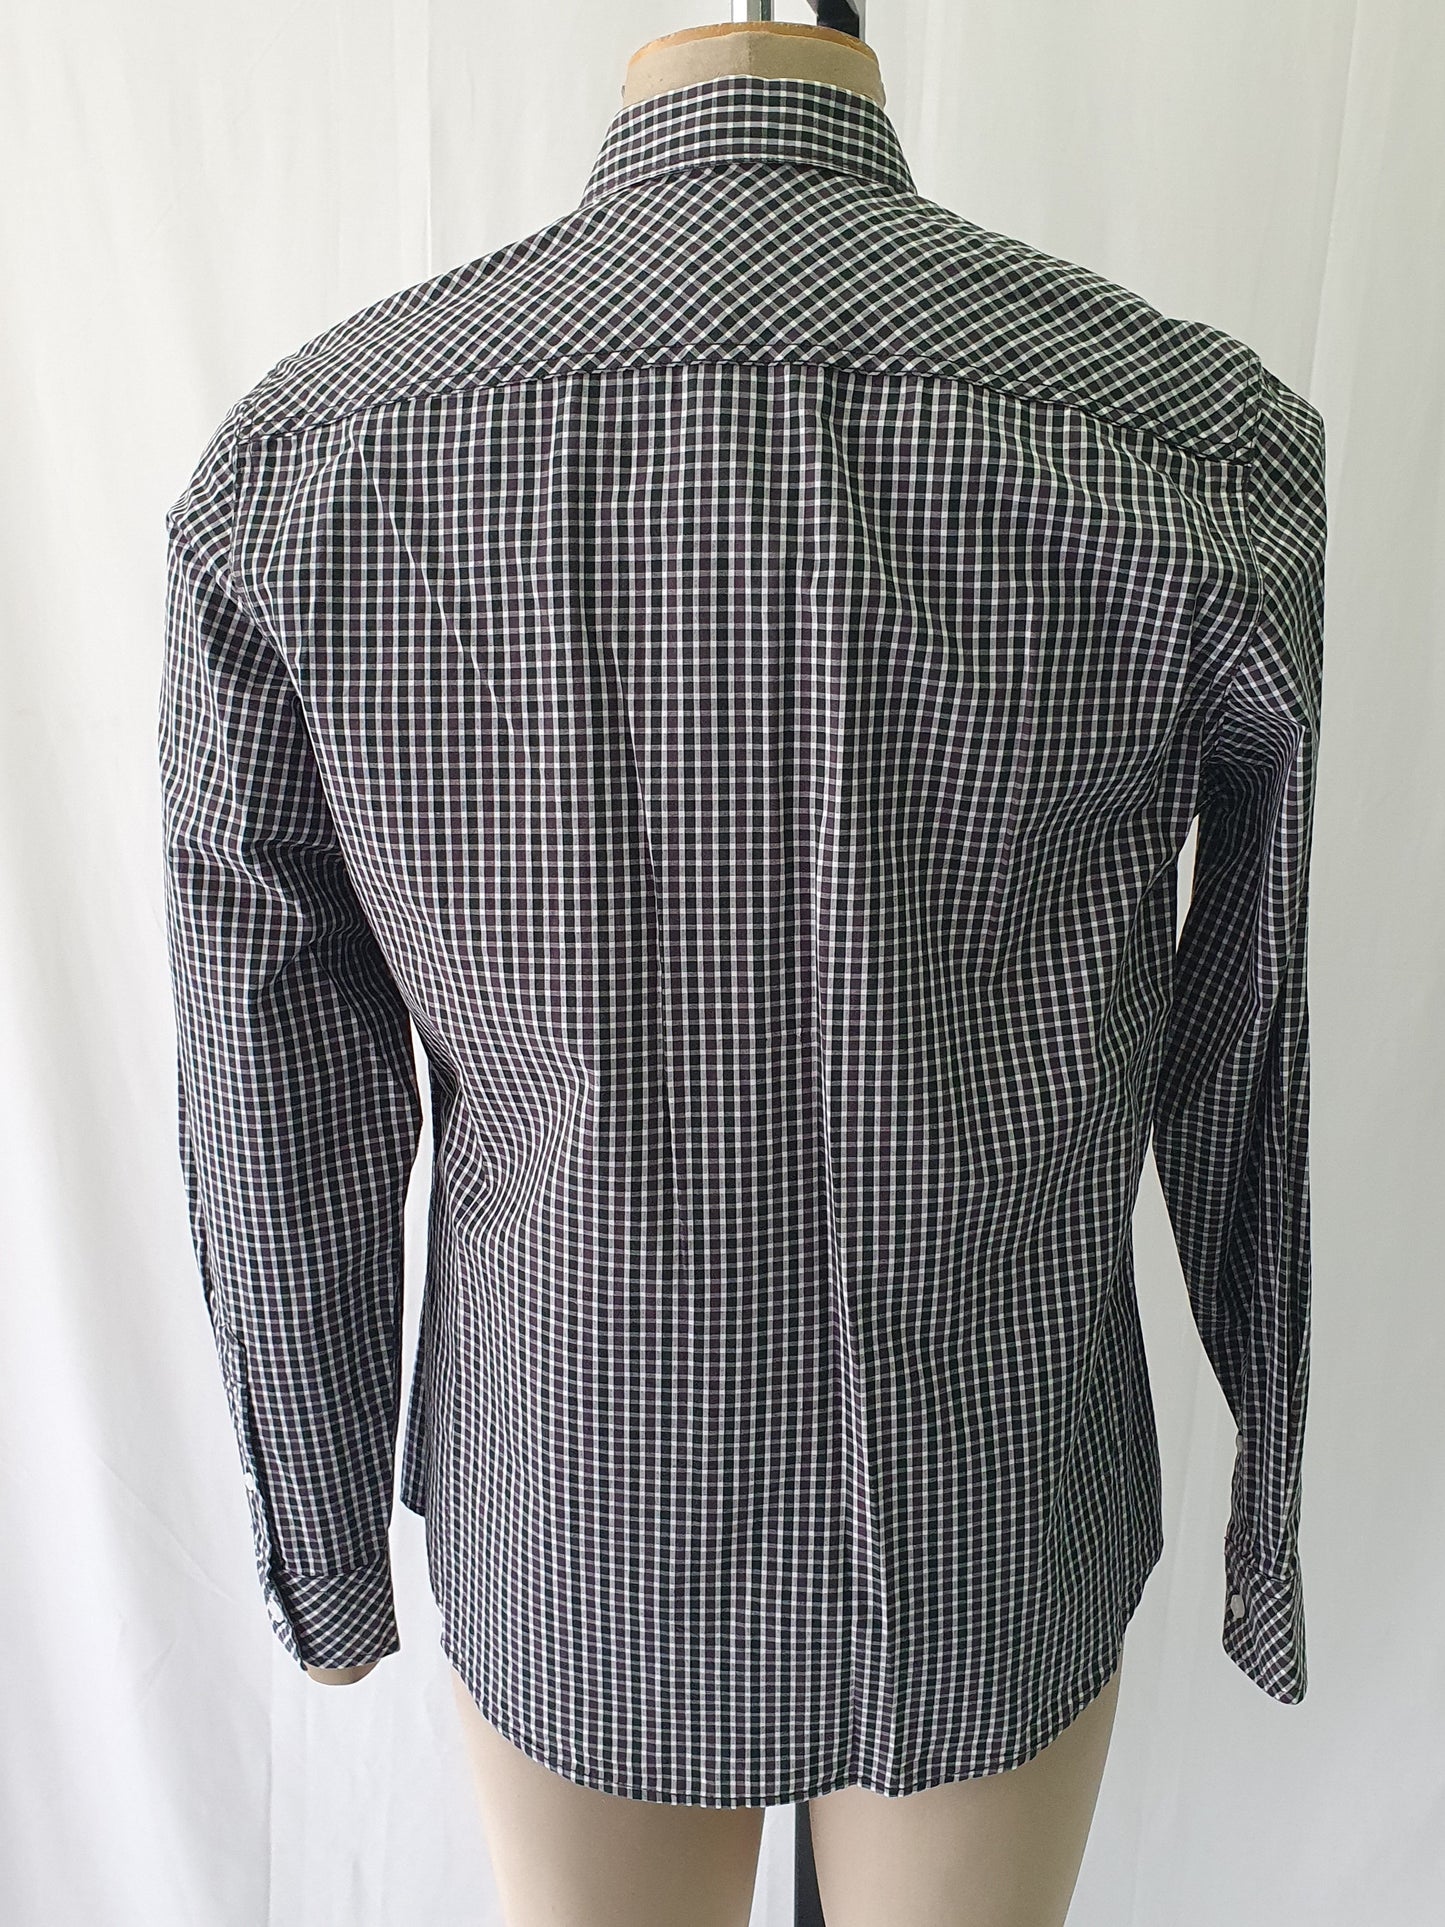 PW5852129 - Pelaco Charcoal check casual shirt - Regular Fit